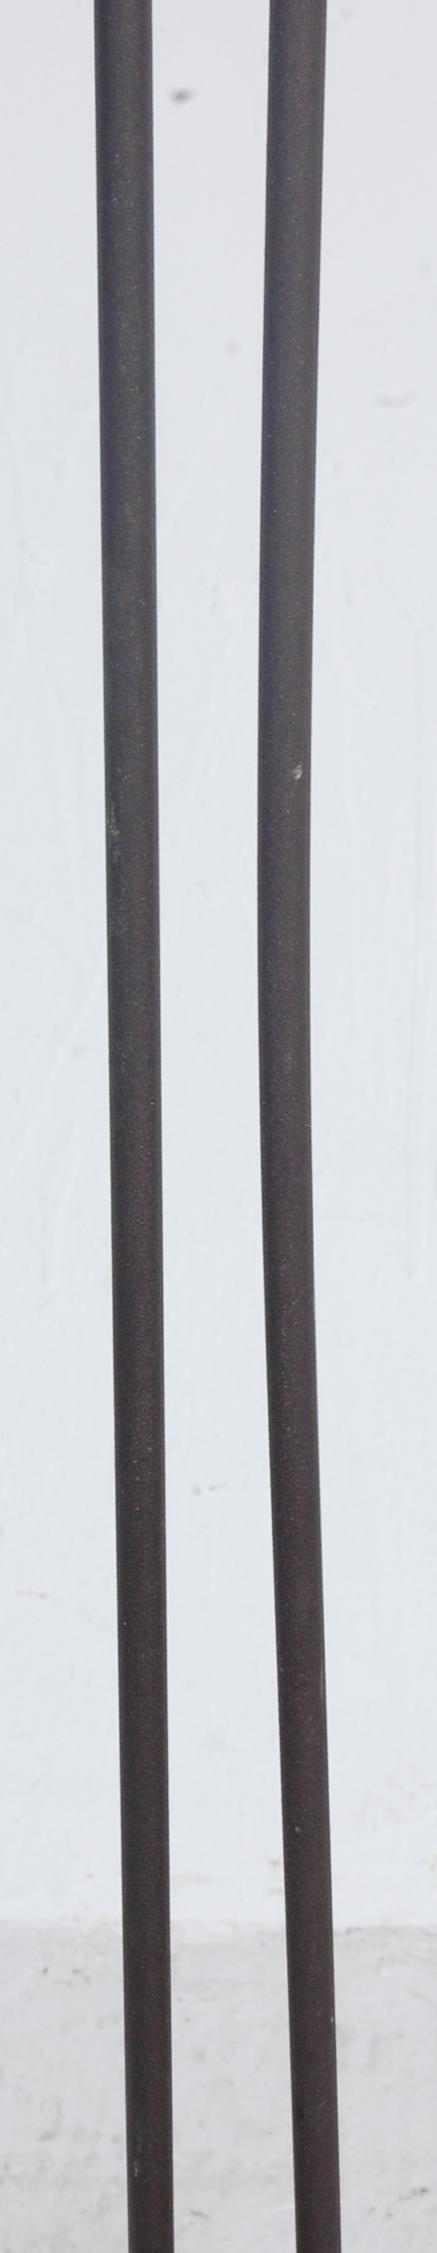 RETRO VINTAGE 20TH CENTURY TWIN HEADED SPOT LAMP - Image 4 of 5